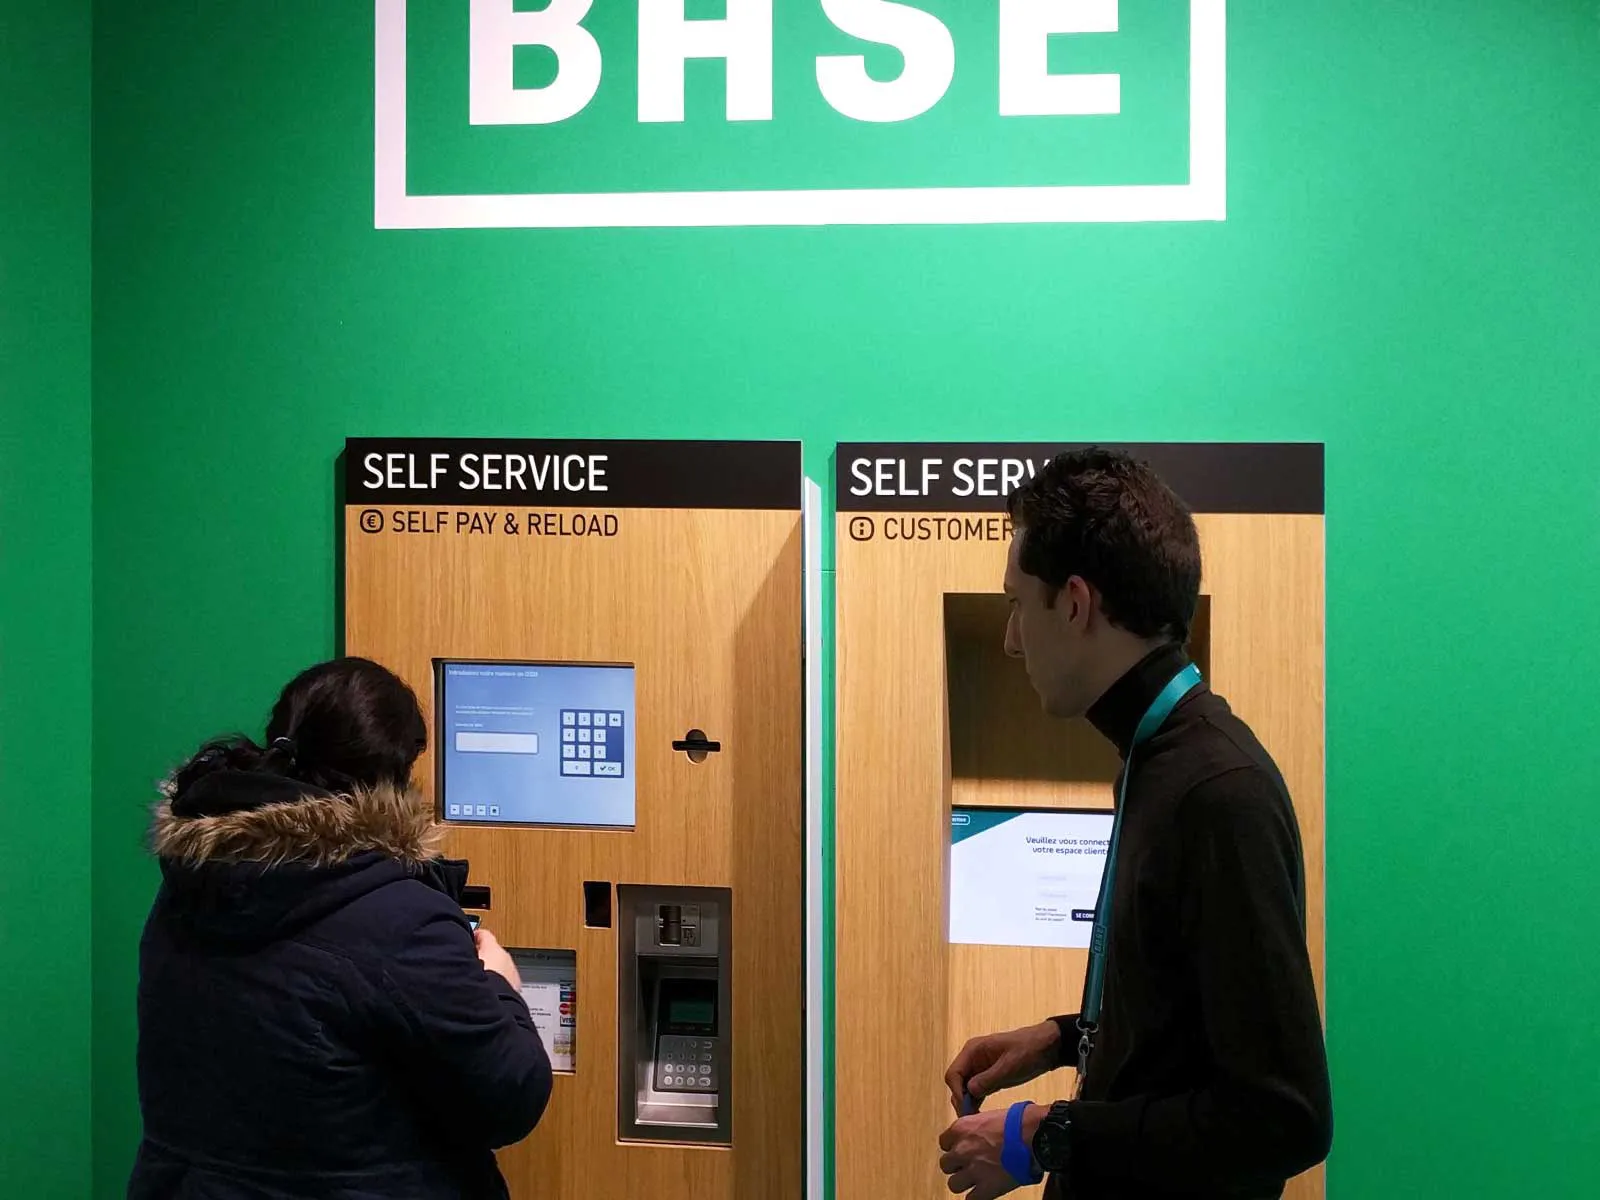 self service kiosk payment terminal keyboard in bank